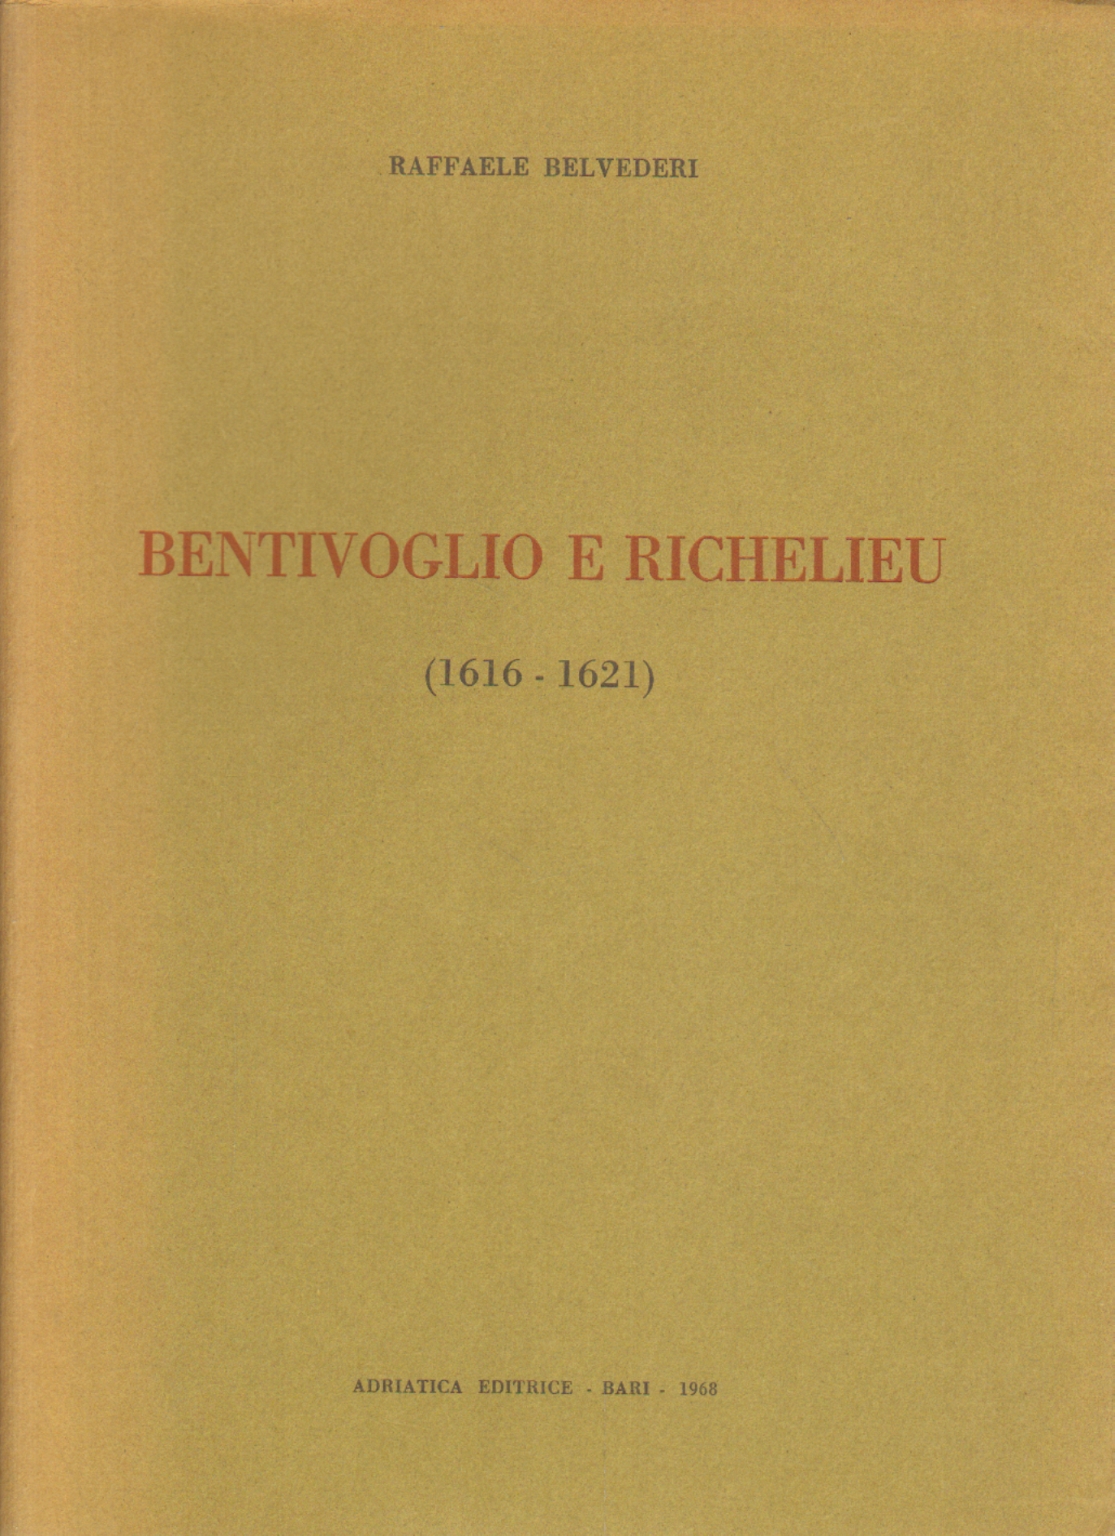 Bentivoglio and Richelieu